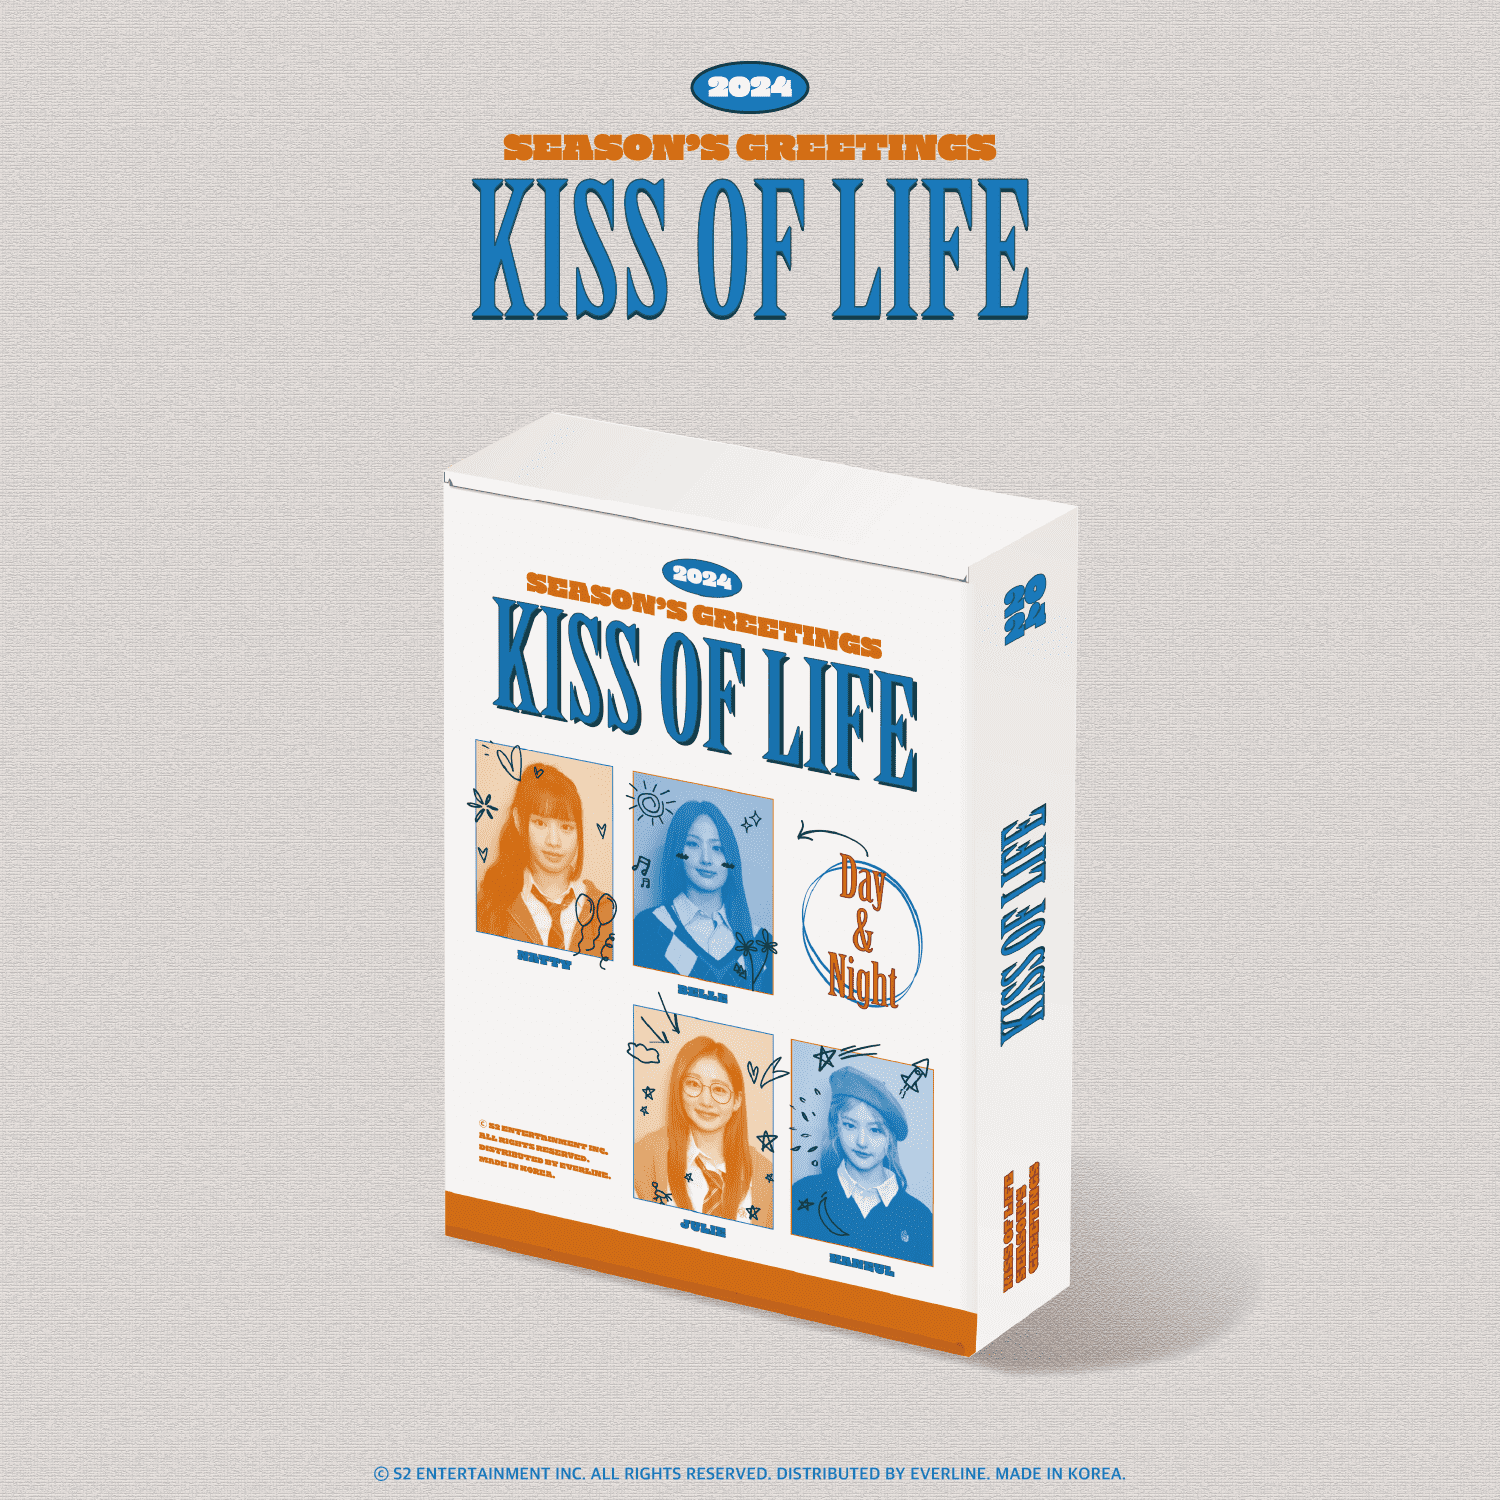 KISS OF LIFE 2024 Season's Greetings + POB Photocard